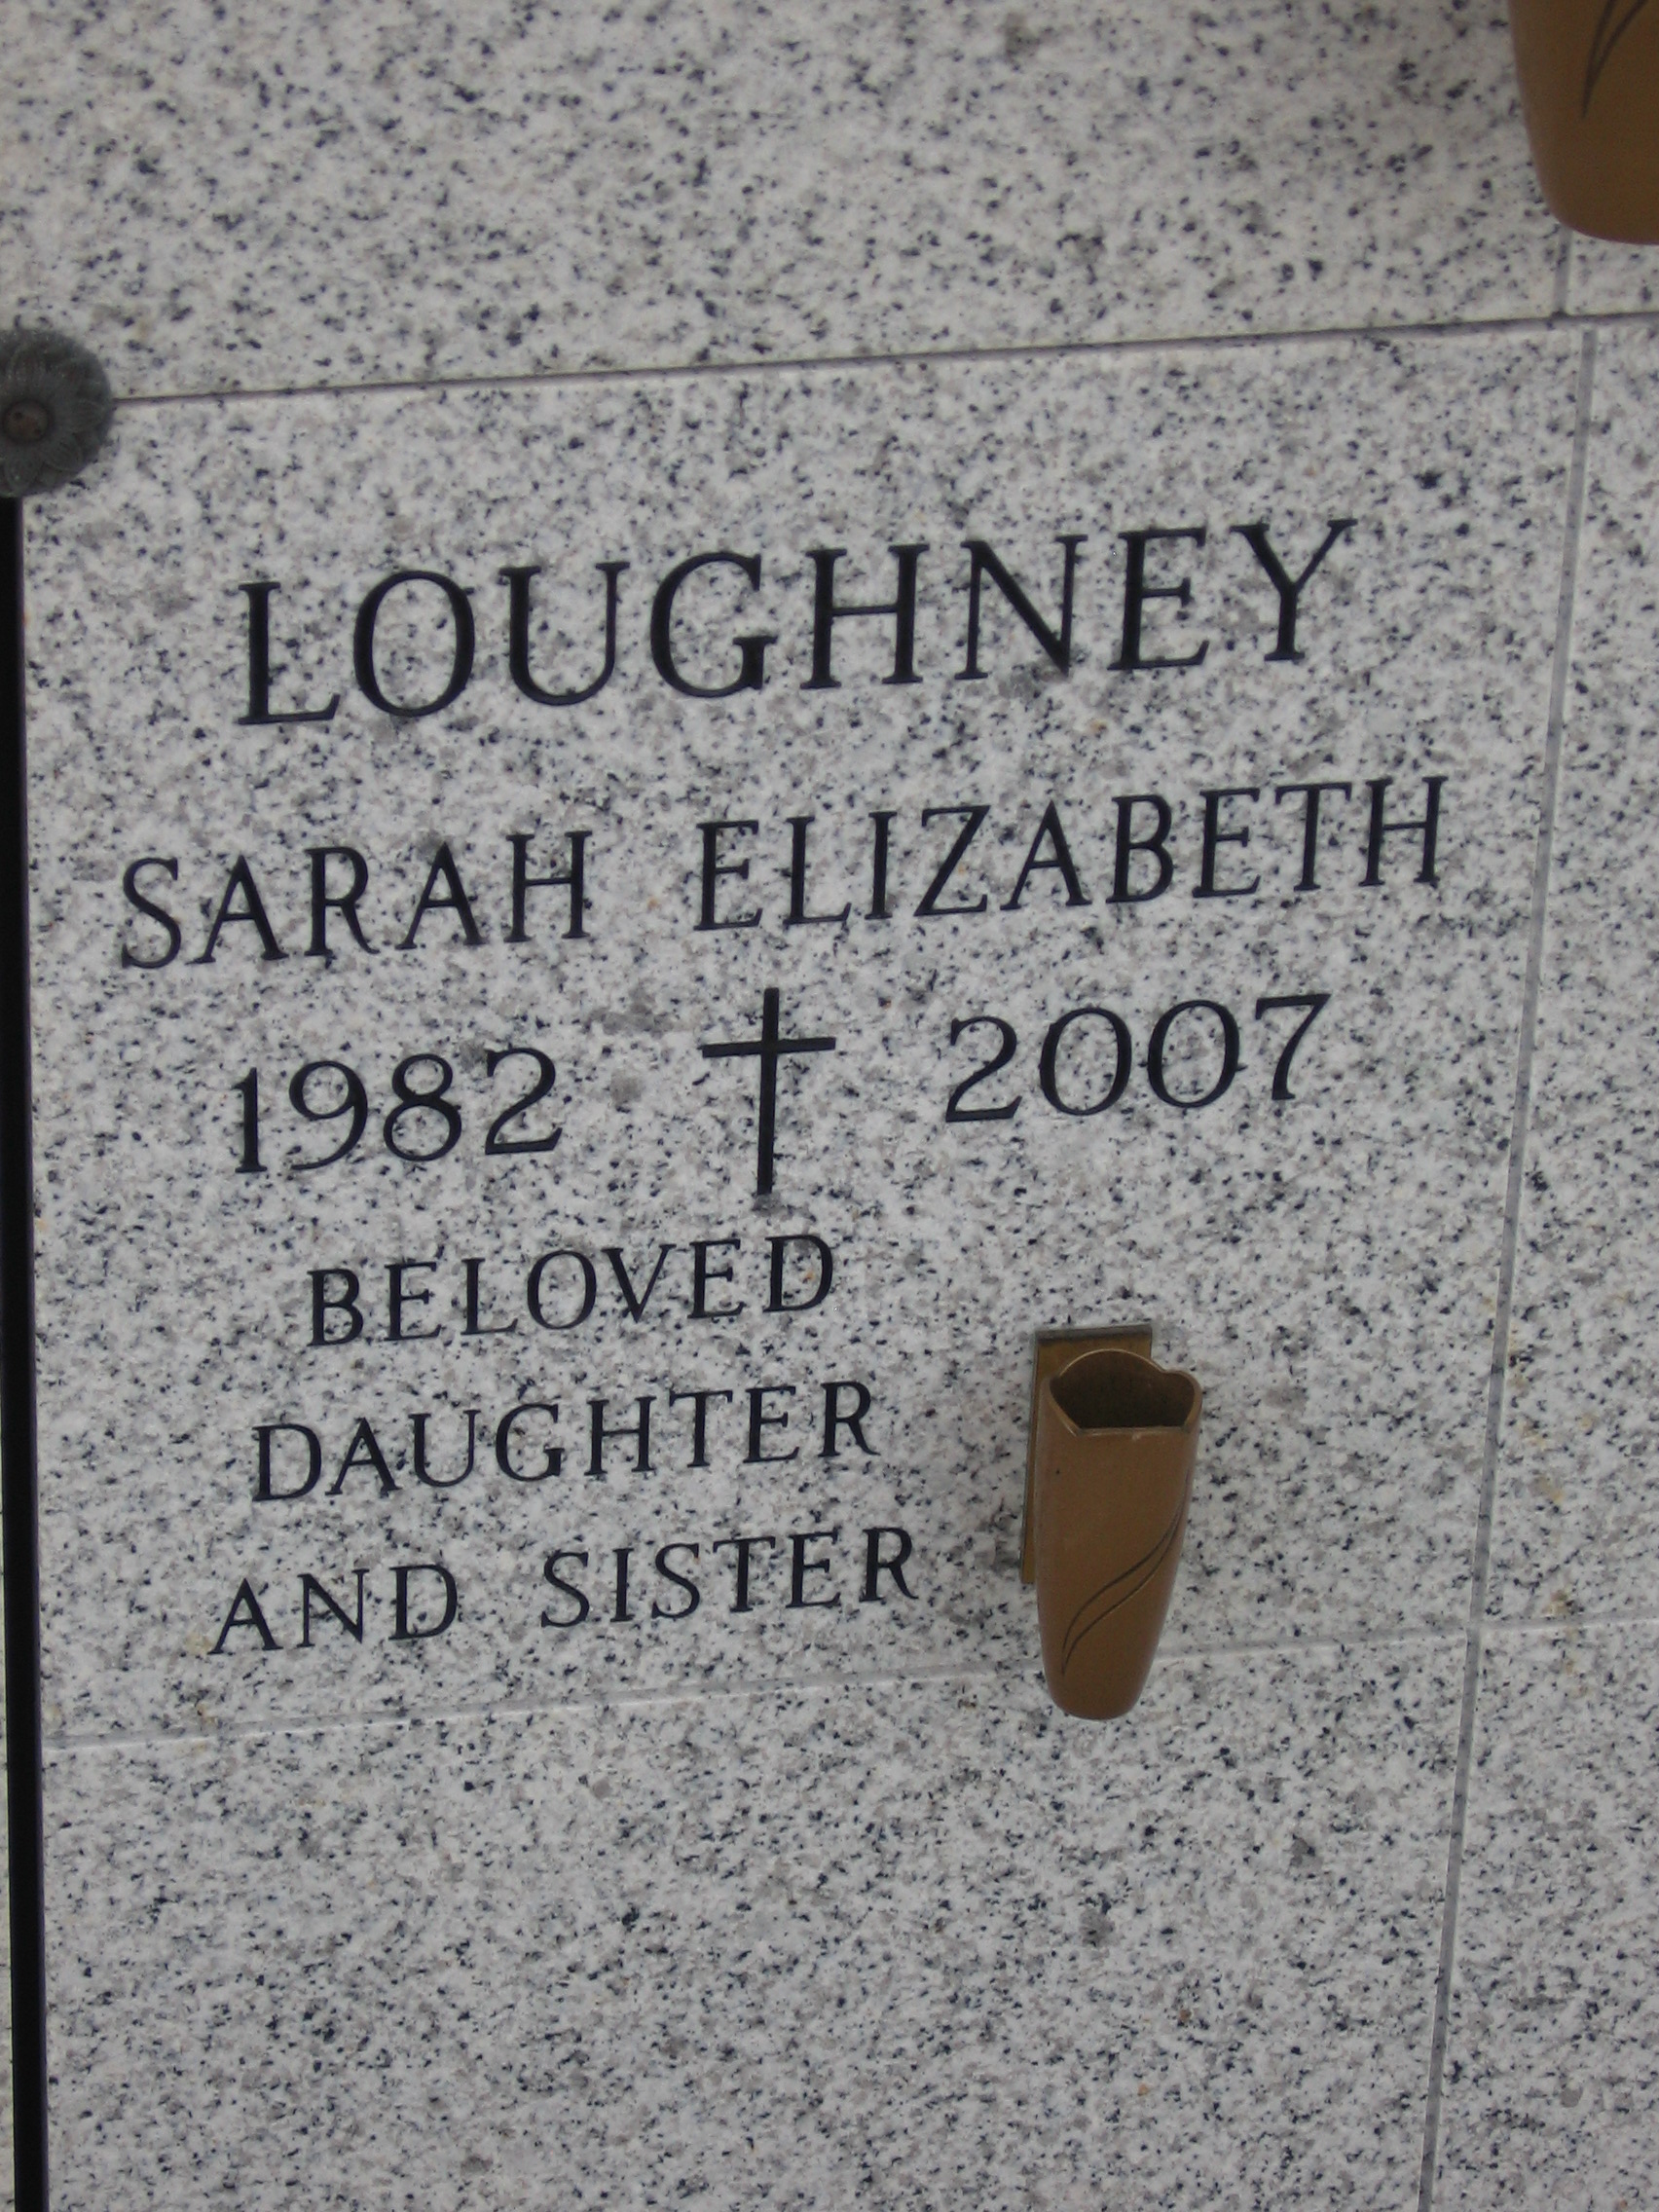 Sarah Elizabeth Loughney